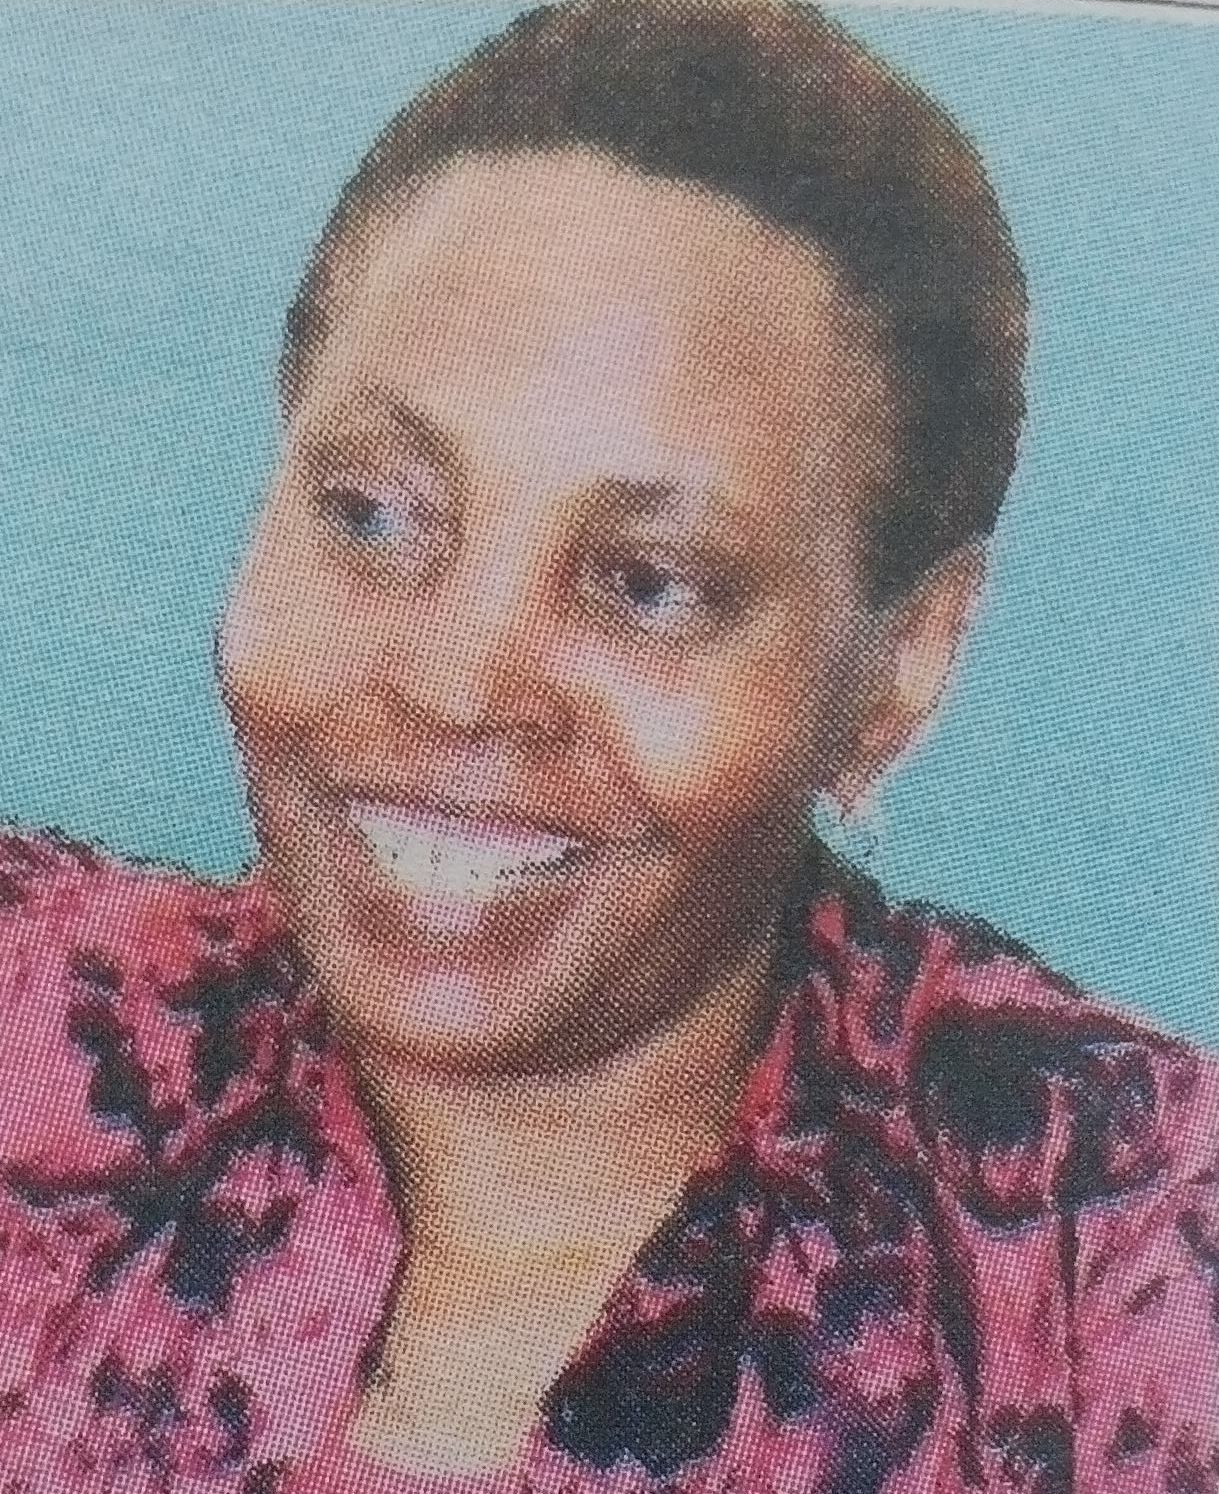 Obituary Image of Veronica Wangari Wanyori